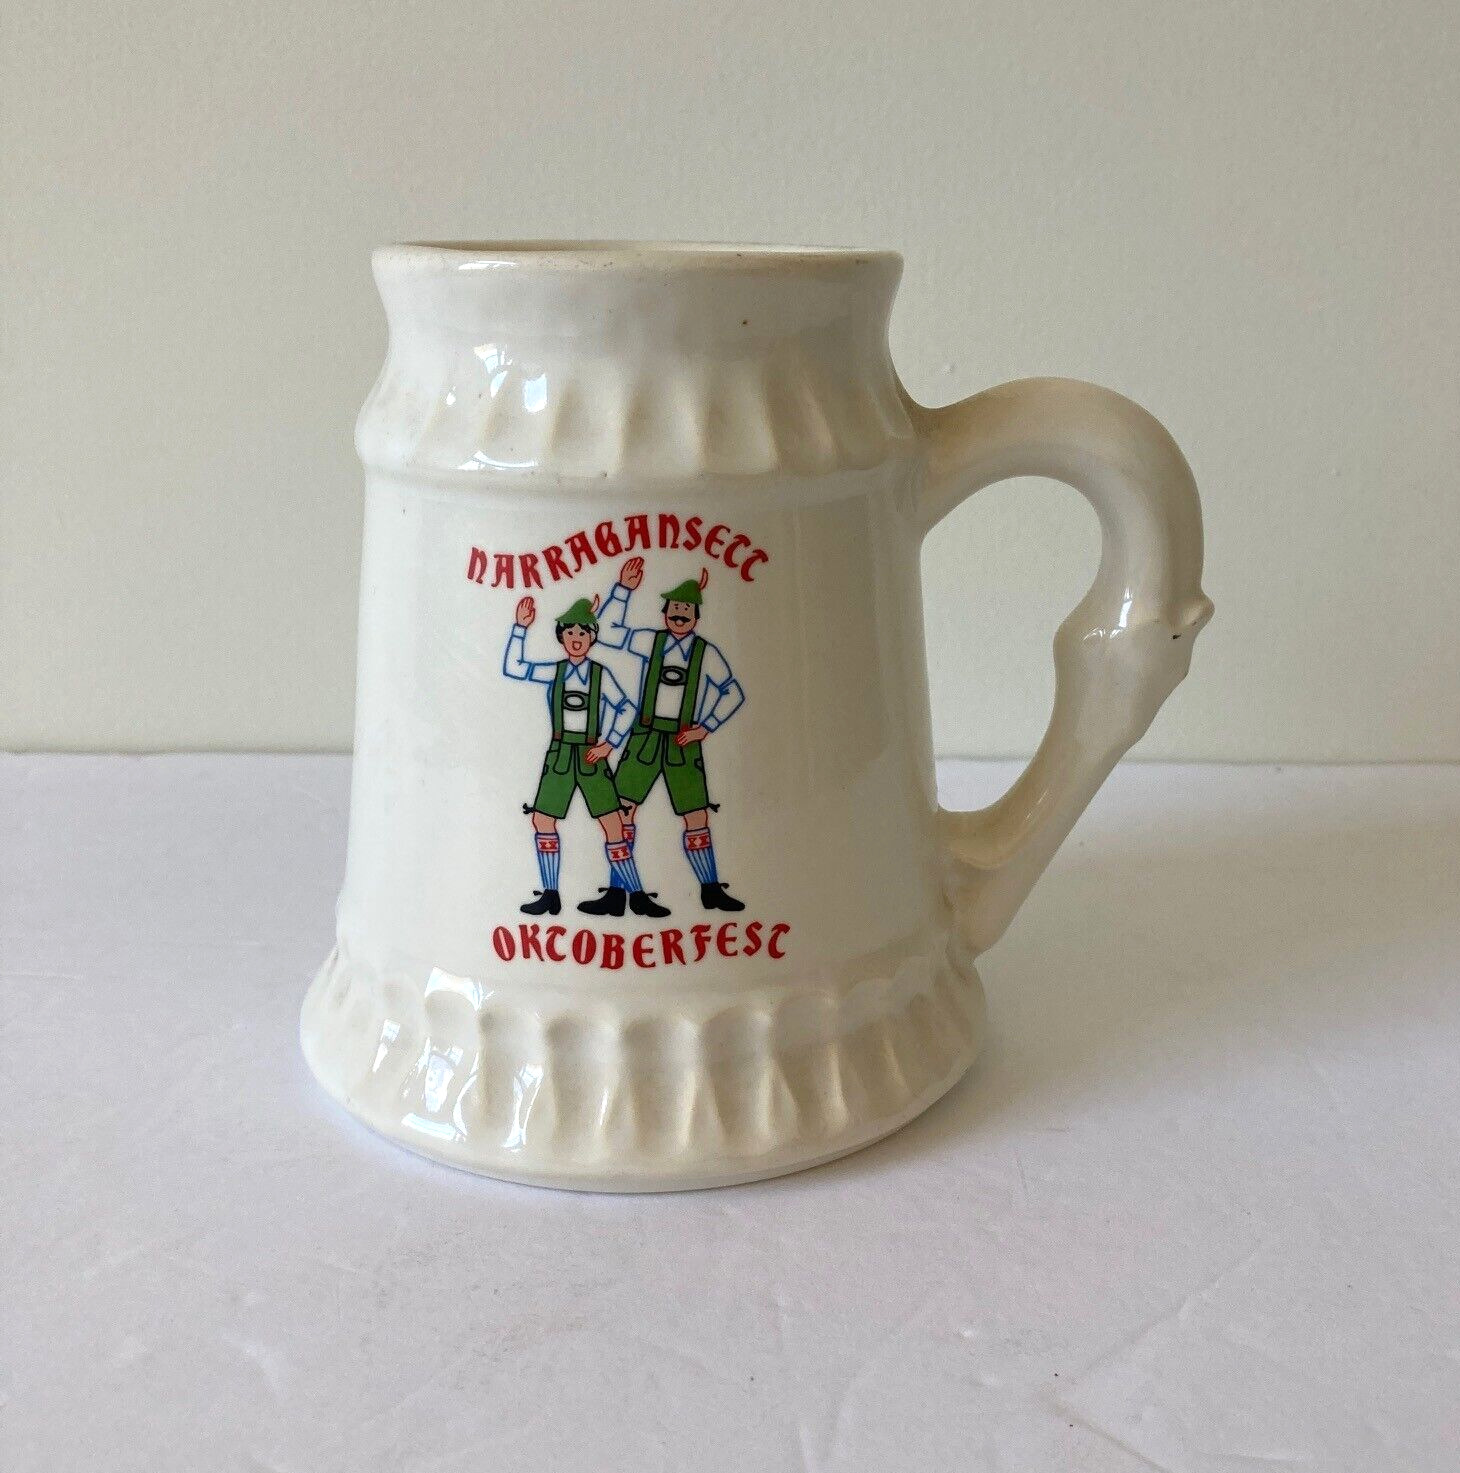 Vintage Narragansett Oktoberfest Beer Stein 1971 Munich Germany Pottery Ceramic